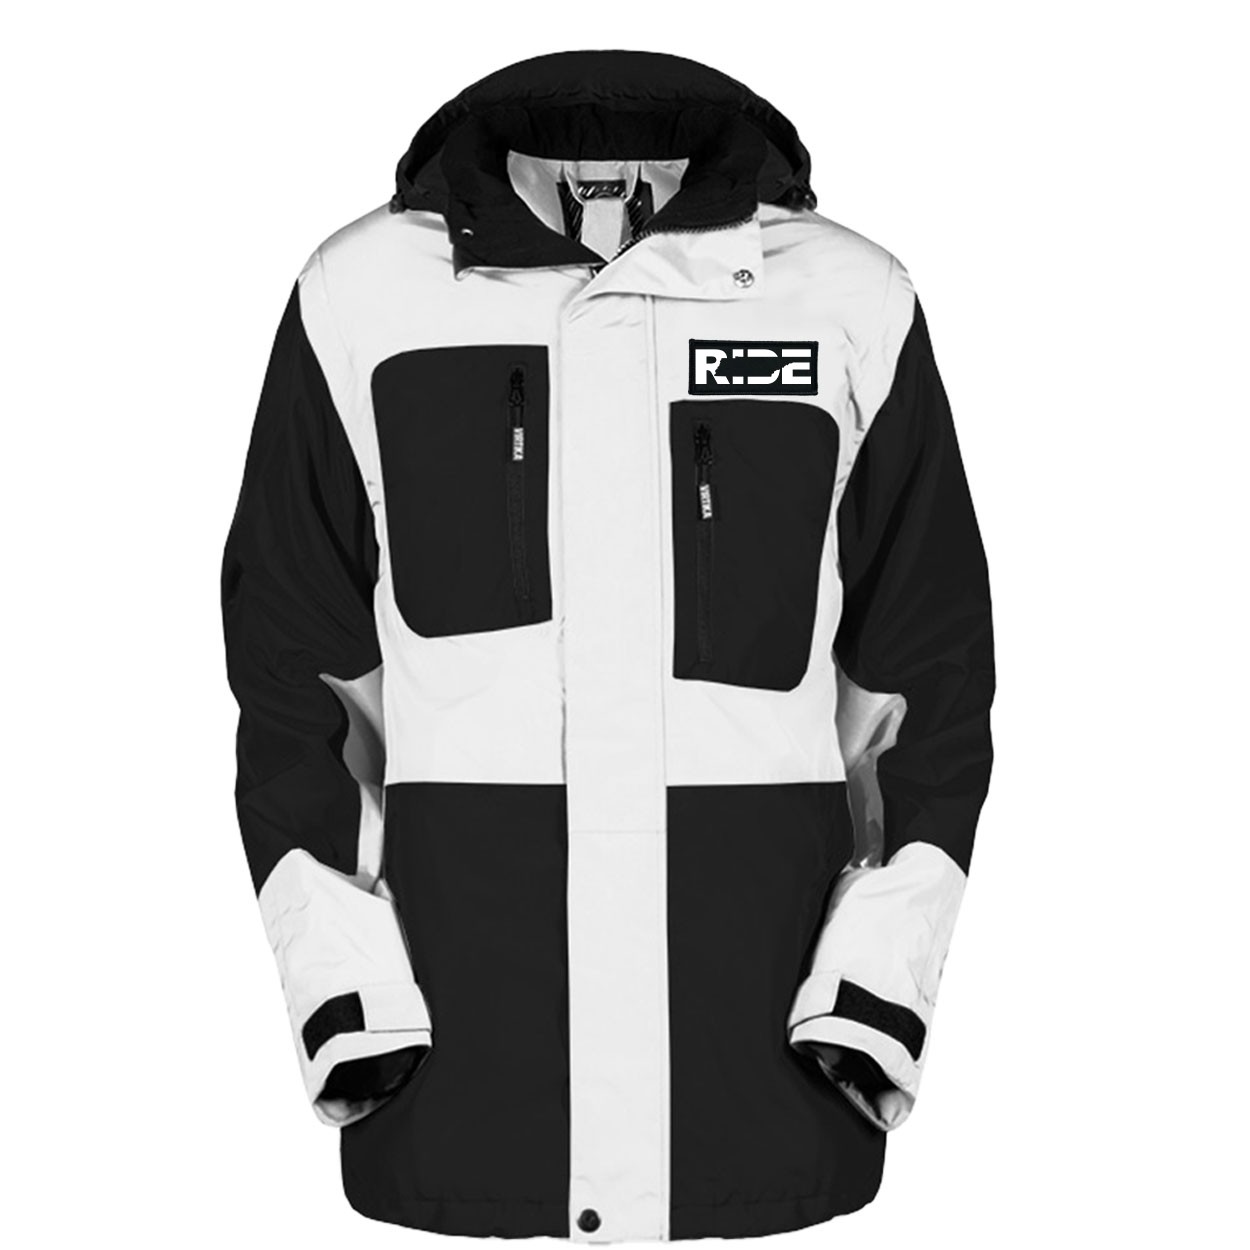 Ride Tennessee Pro Waterproof Breathable Winter Virtika Jacket Black/White (White Logo)